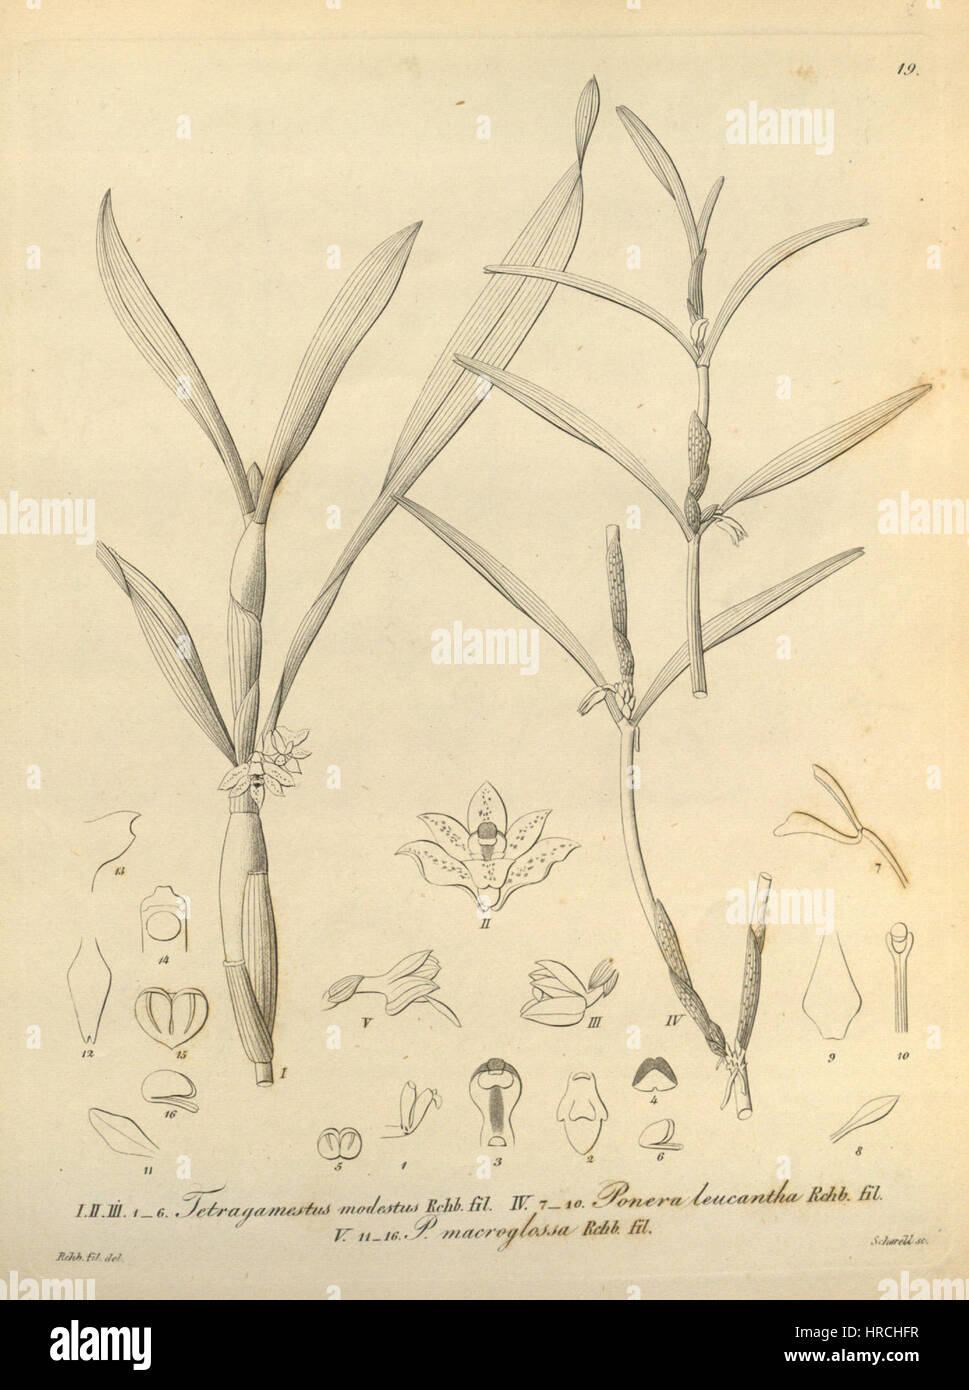 Scaphyglottis modesta (=Tetragamestus modestus) - Xenia v. 1 (1858) tab. 19 Stock Photo